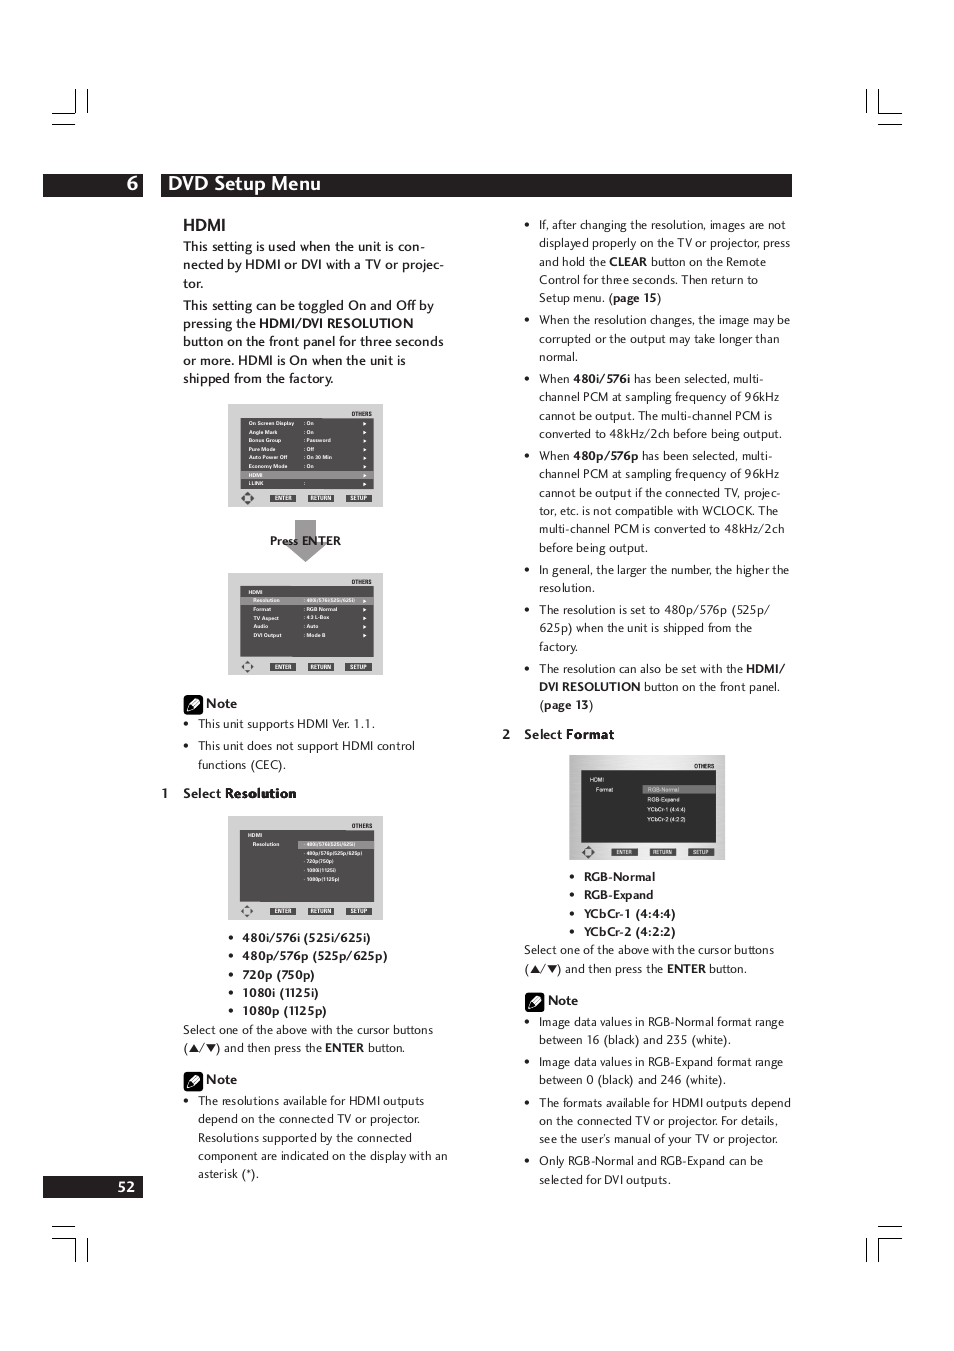 Dvd setup menu 6, Hdmi, 2 select format format format format format | Marantz DV9600 User Manual | Page 52 / 68